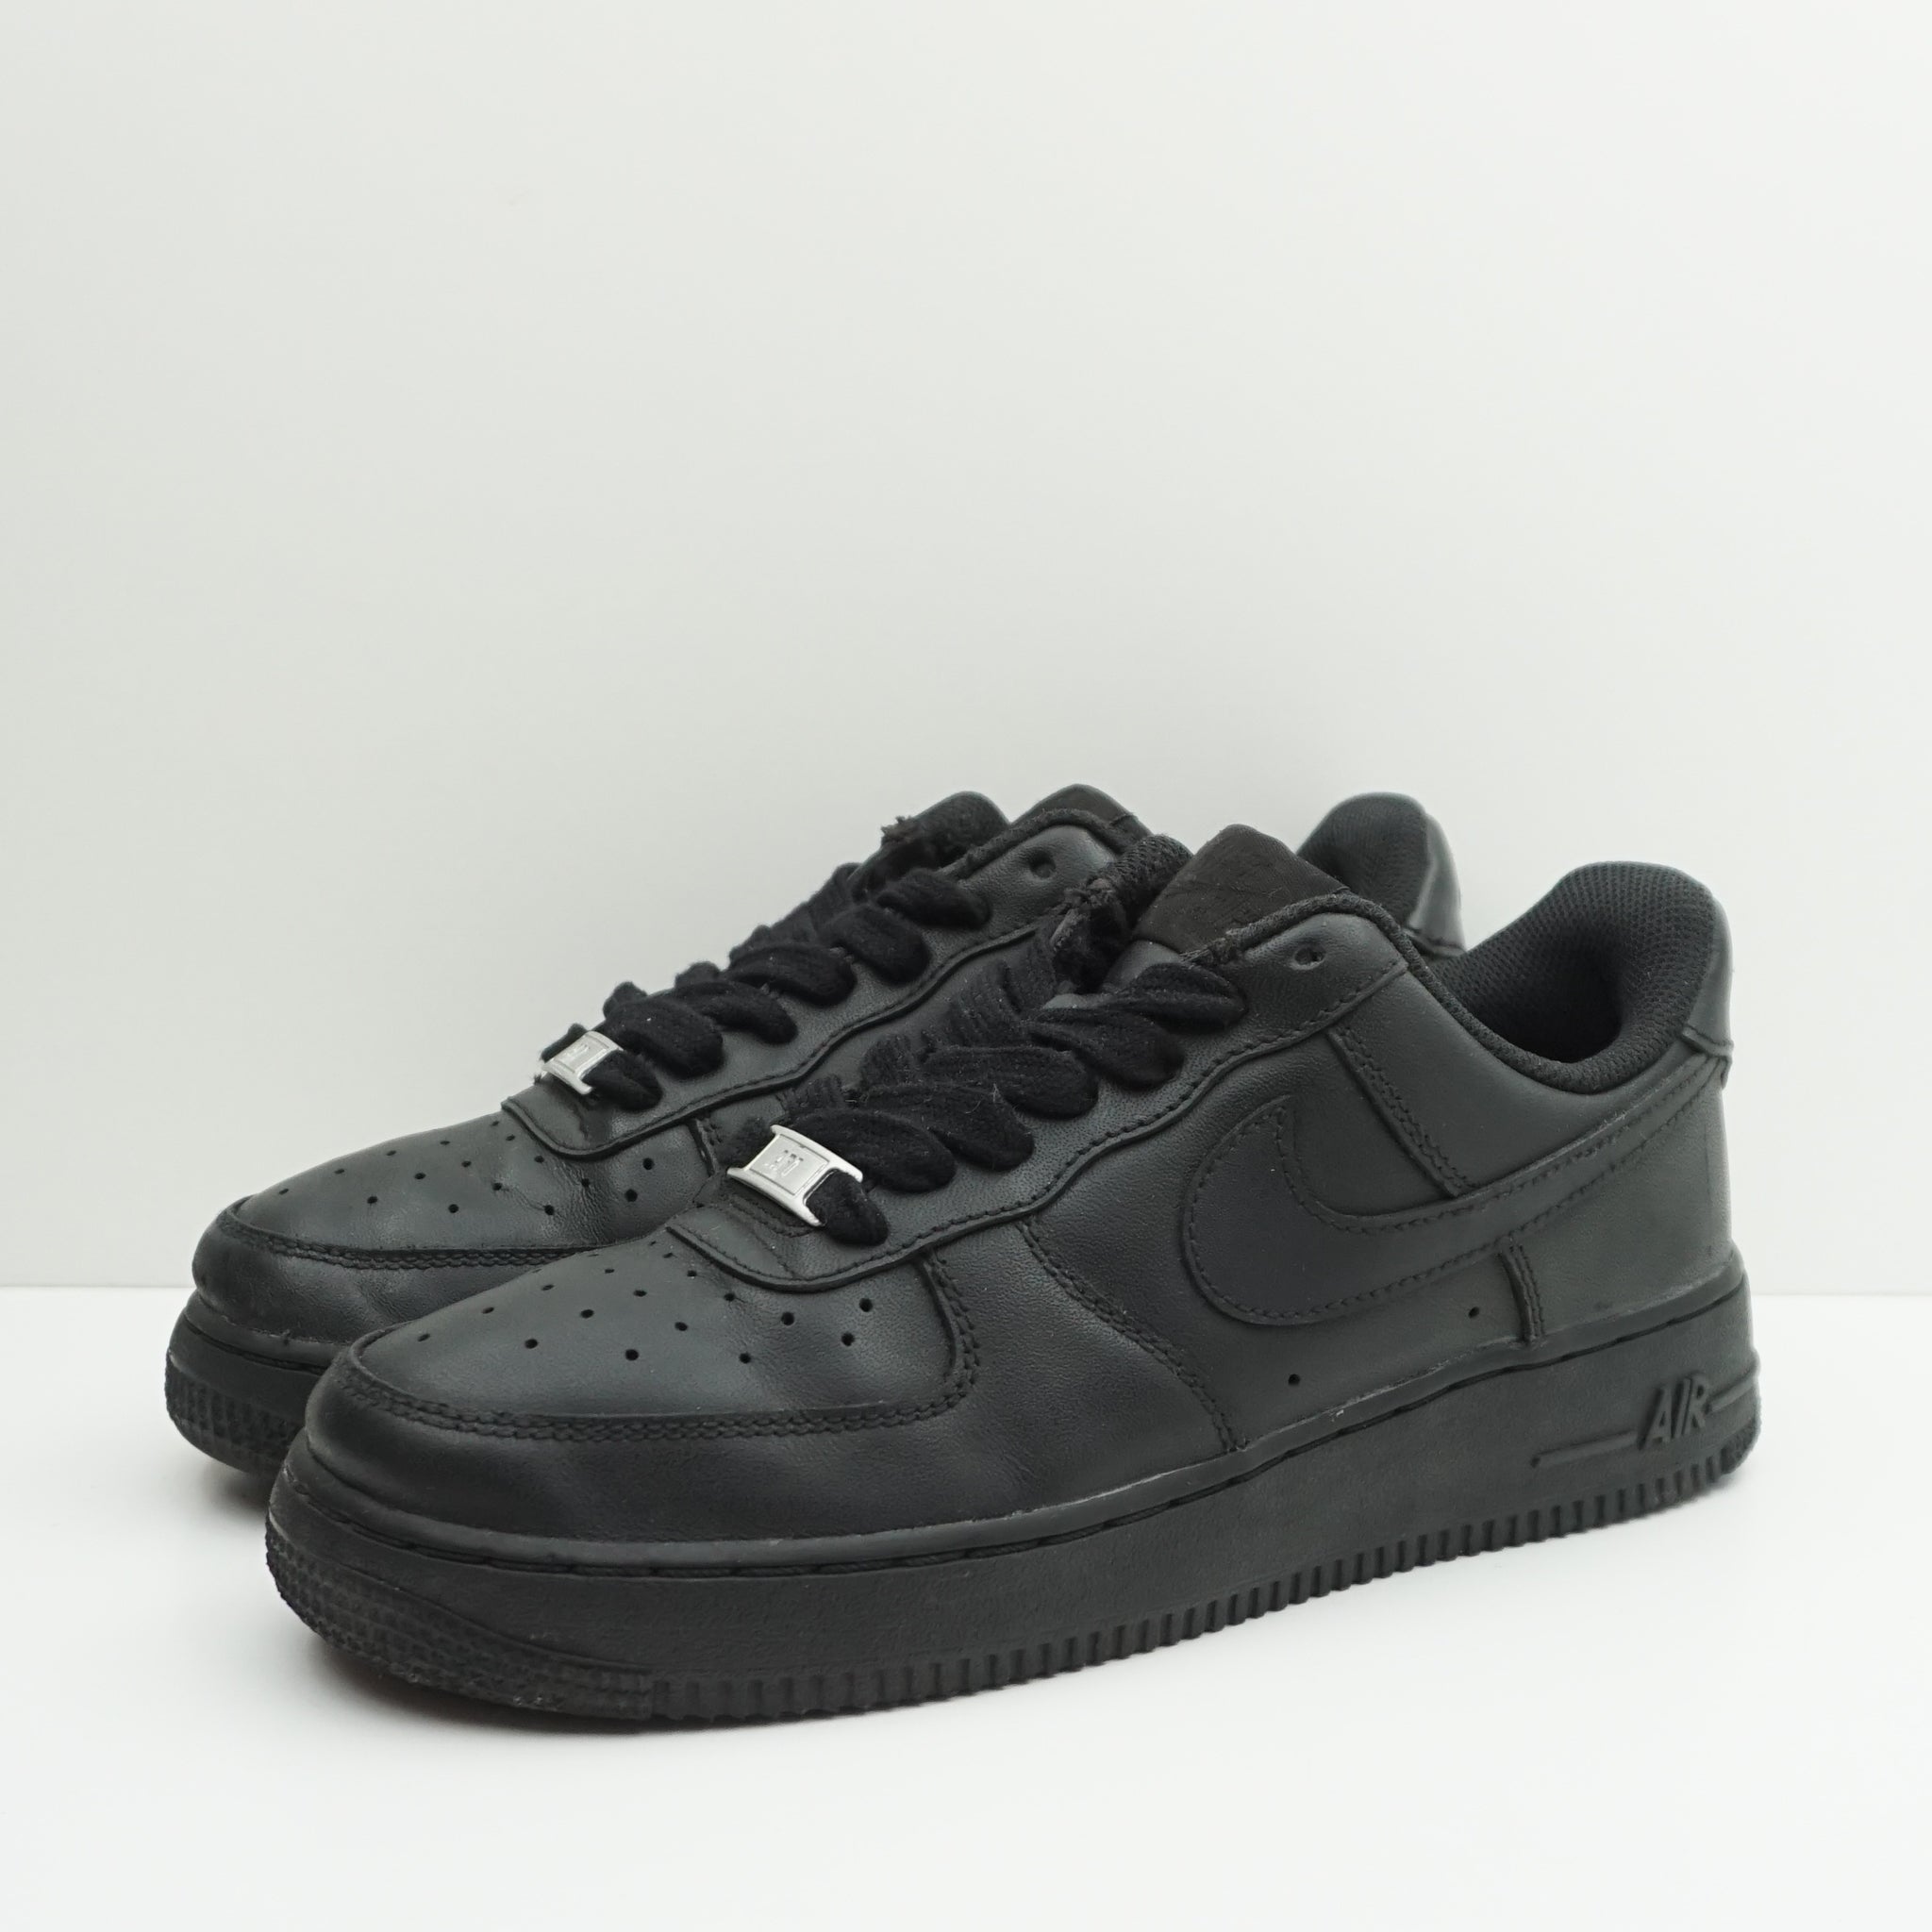 Nike Air Force 1 Low 07 Black (W)